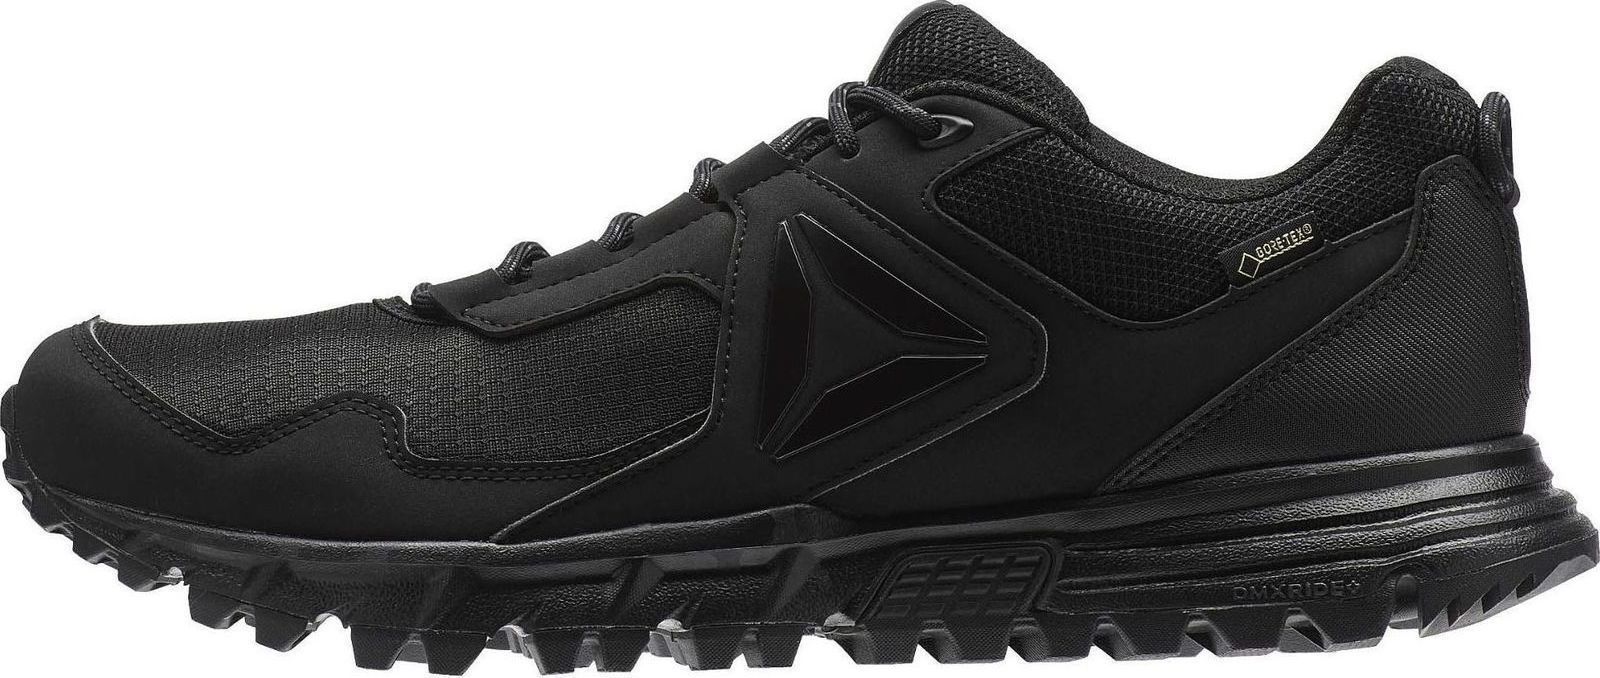 Reebok Sawcut 5.0 GTX BD5861 Ανδρικά Αθλητικά Παπούτσια Trail Running Μαύρα με Μεμβράνη | Skroutz.gr